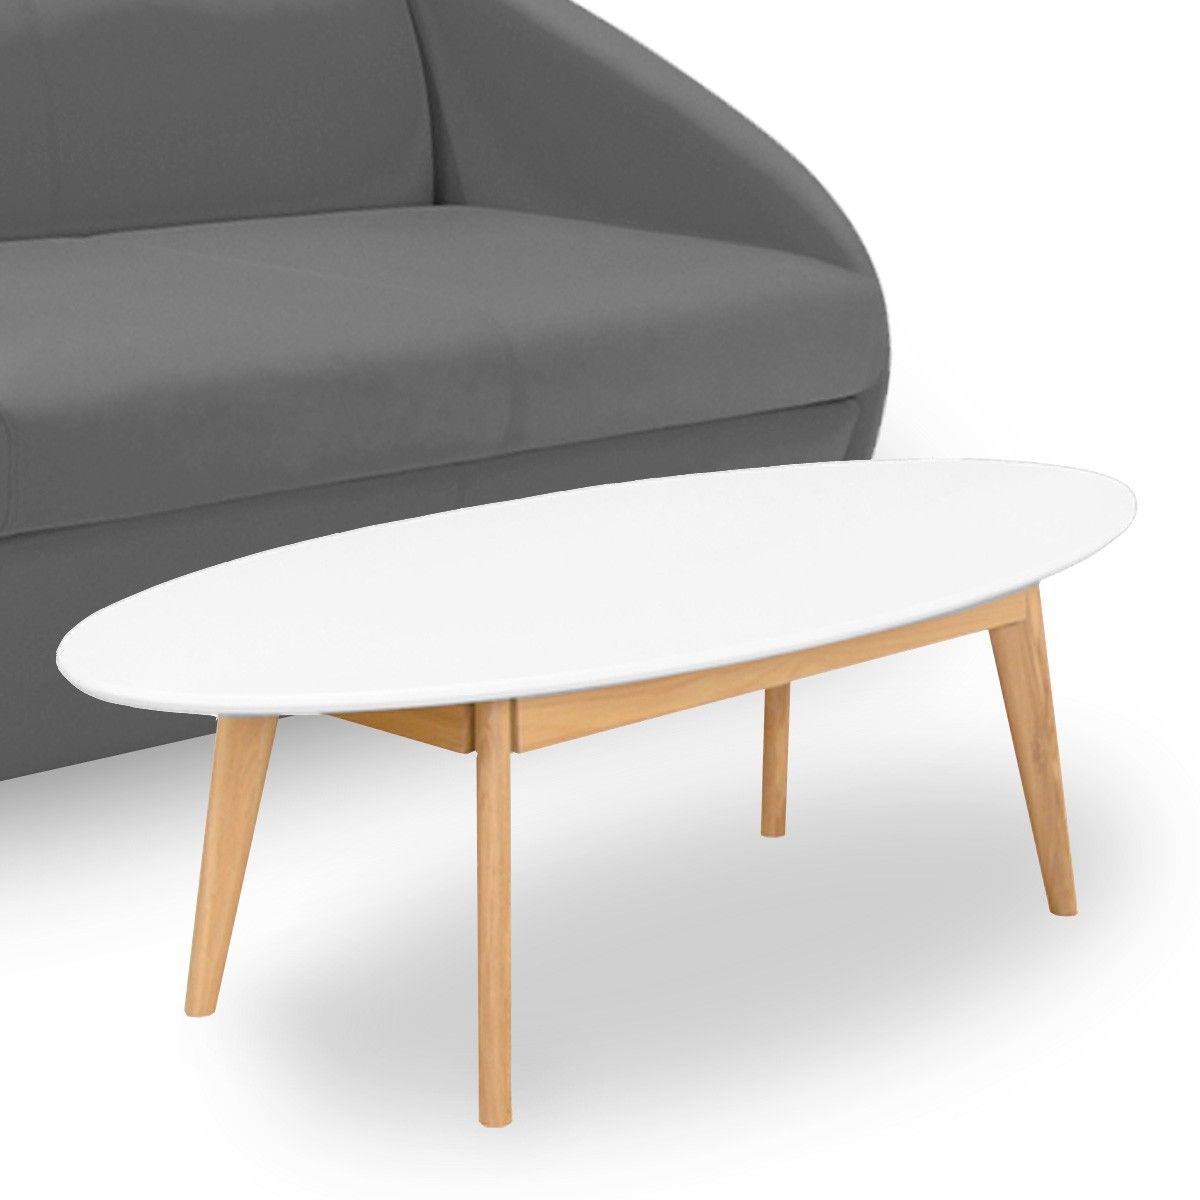 Table basse design scandinave ovale skoll